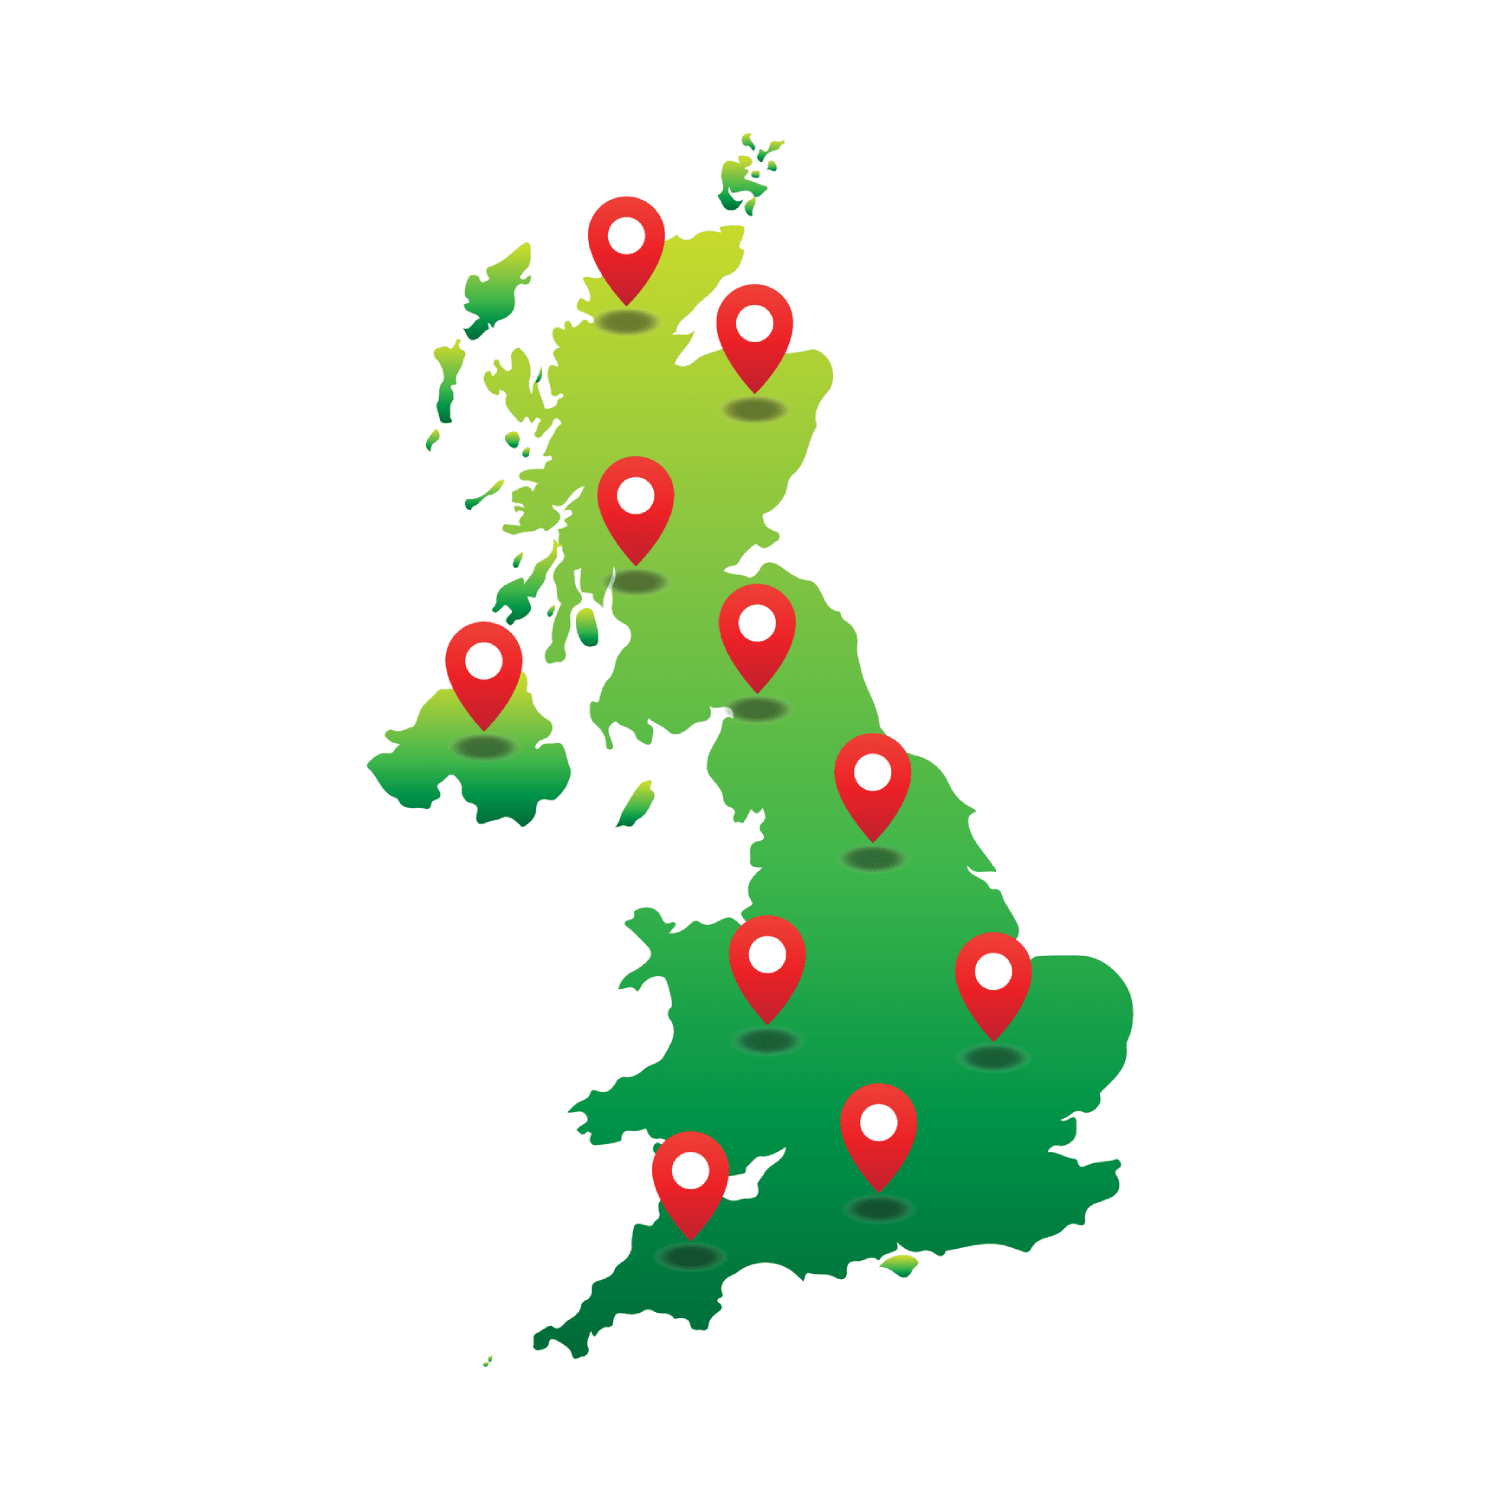 Gardening across the UK